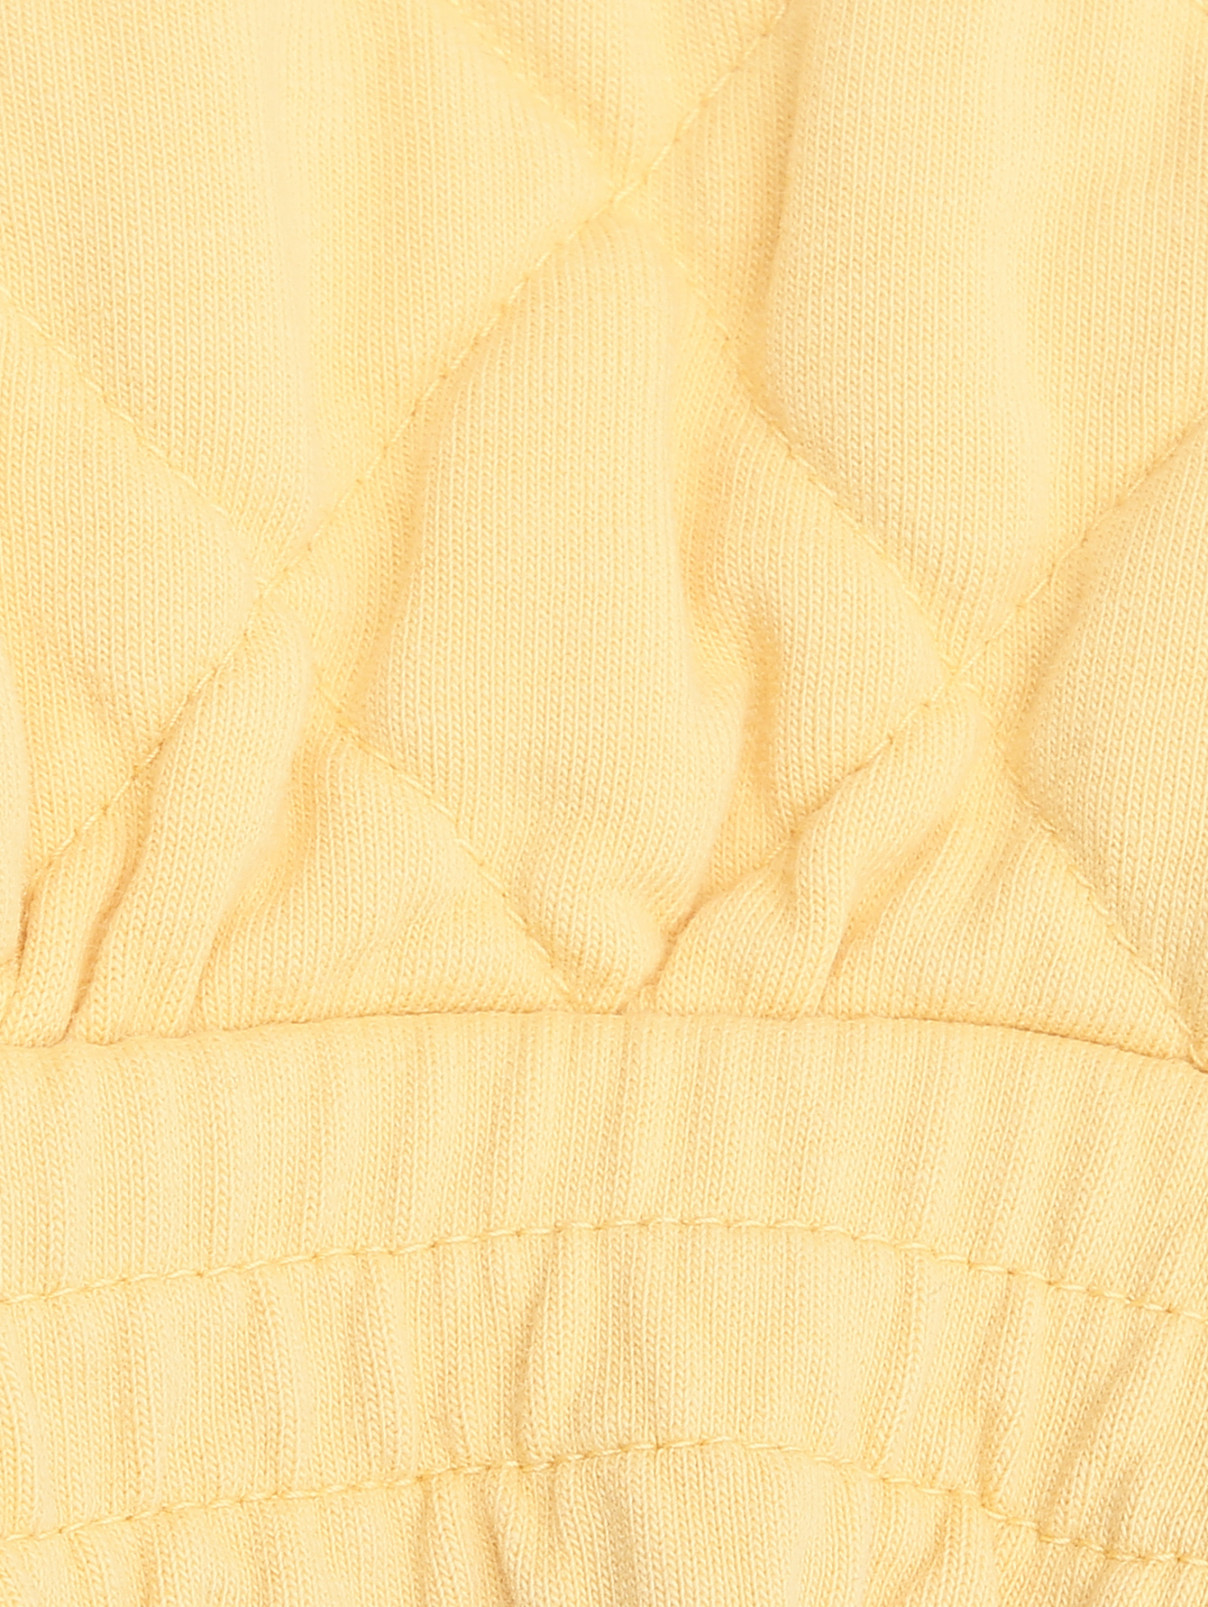 Брюки из хлопка на резинке Ermanno Scervino Junior  –  Деталь1  – Цвет:  Желтый